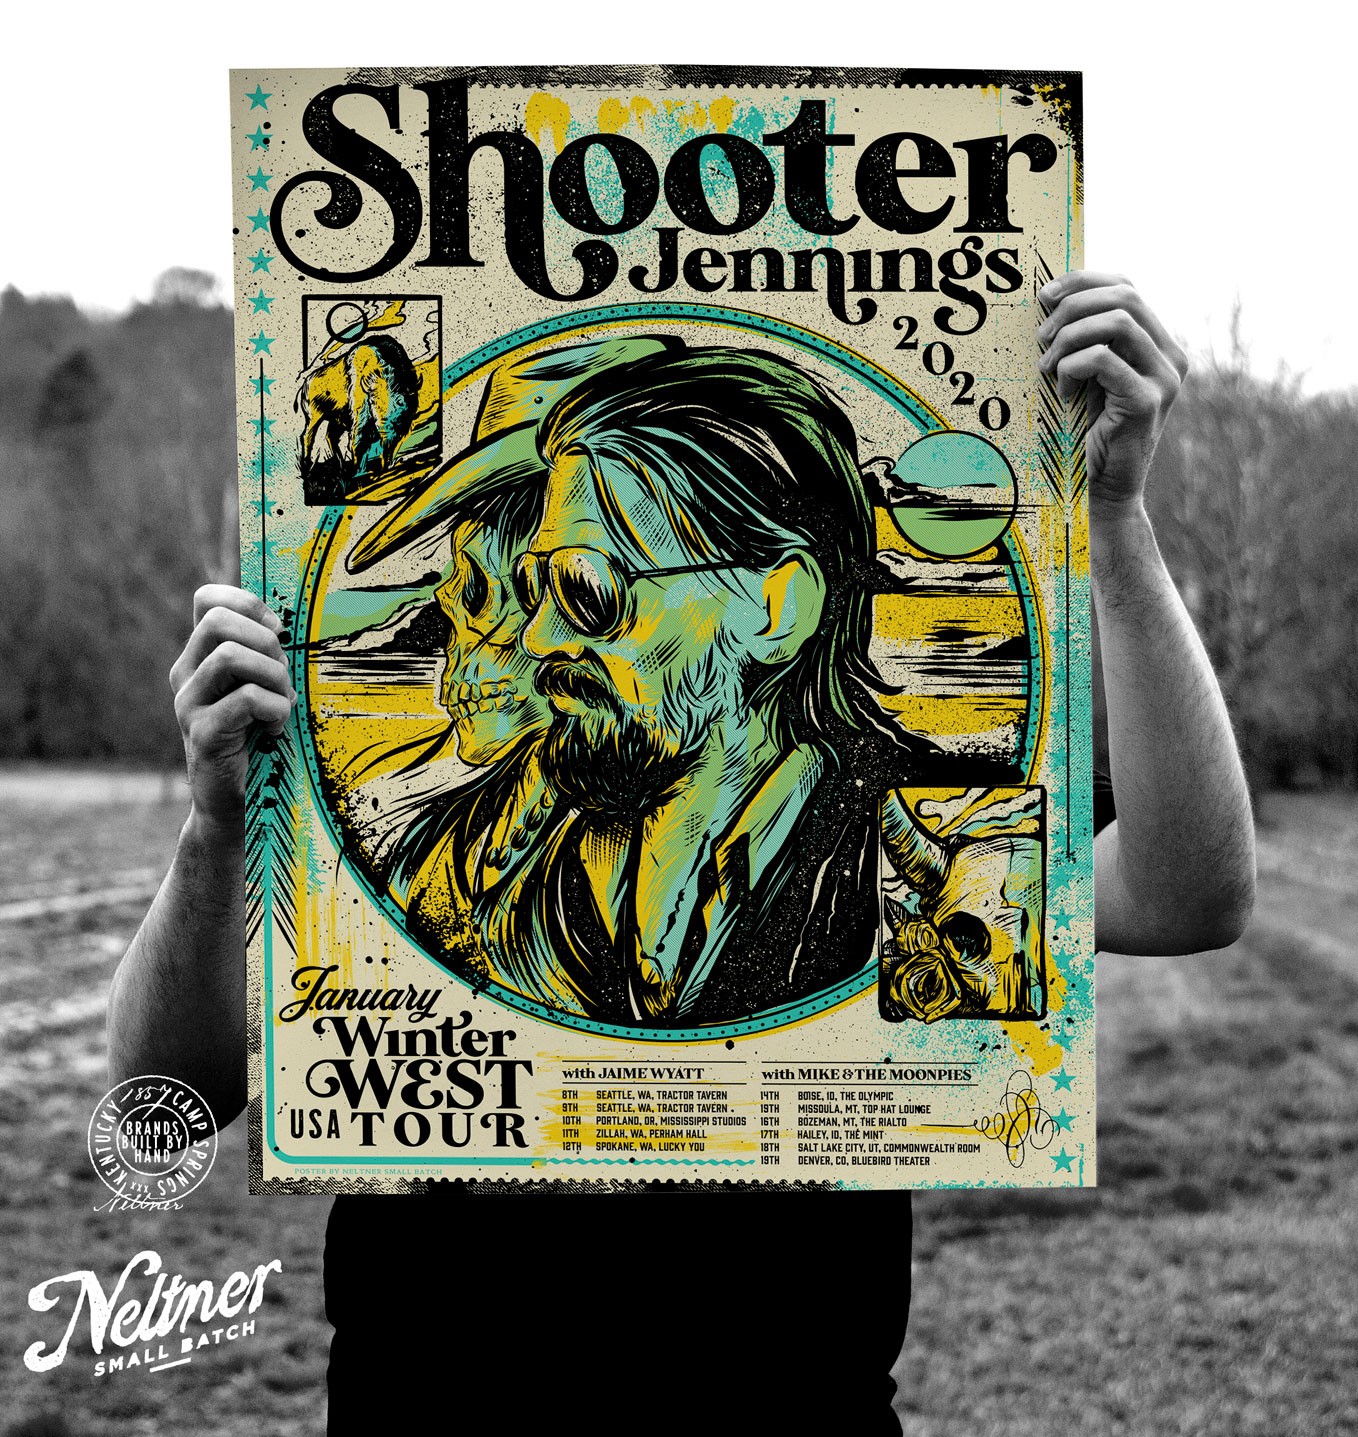 shooter jennings tour schedule